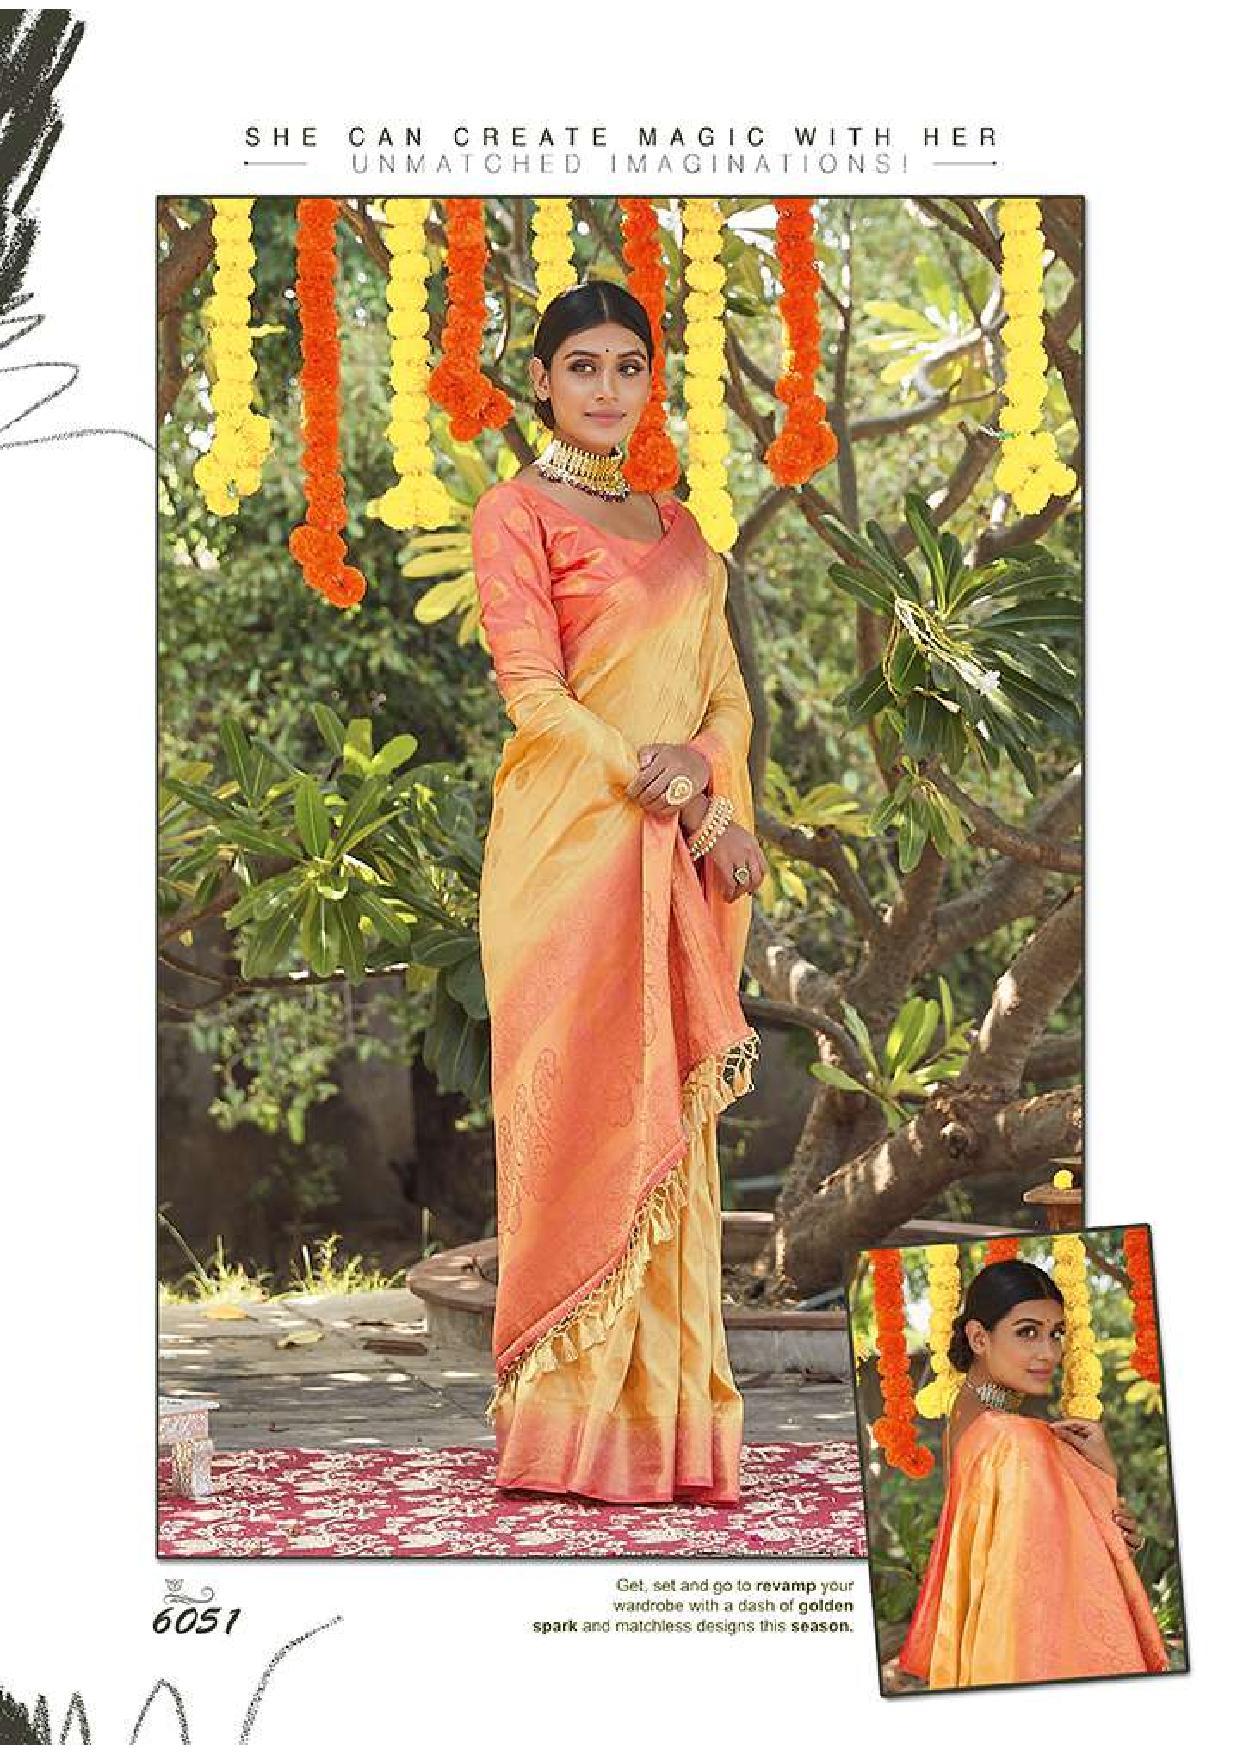 Shangrila Jyoti Festive Wear Silk Sarees Catalog